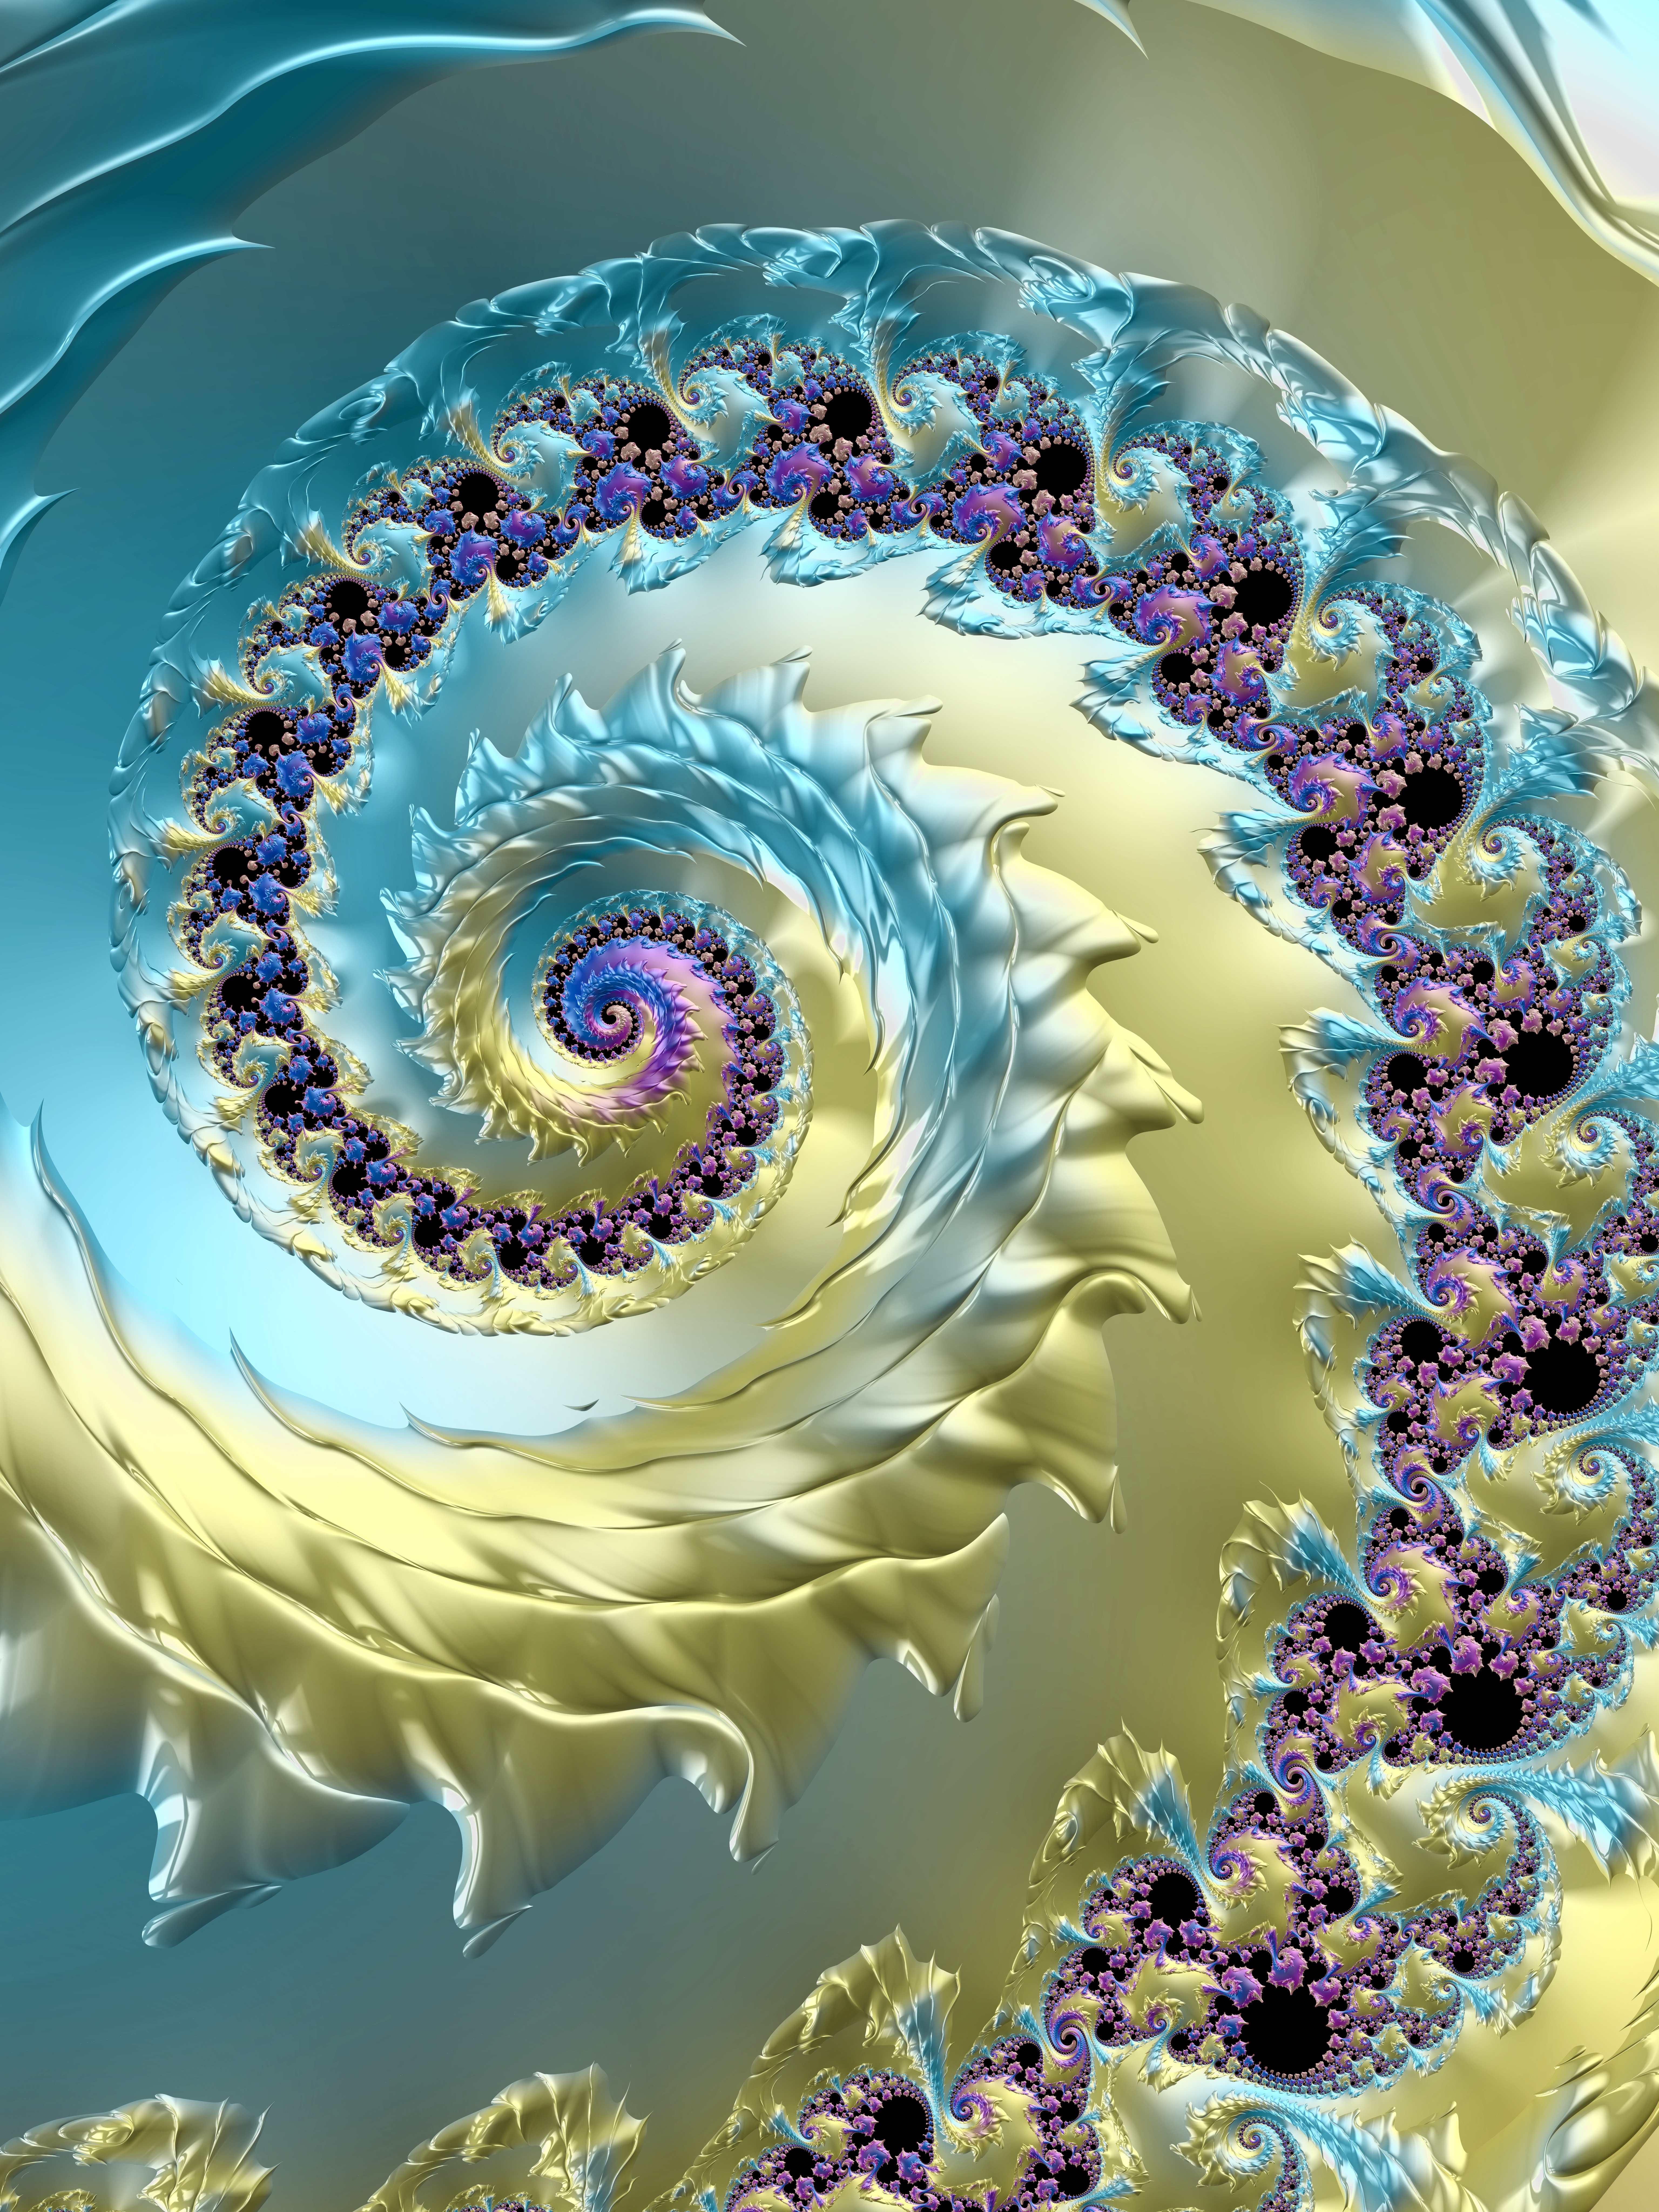 Ocean Spiral by marijeberting on DeviantArt